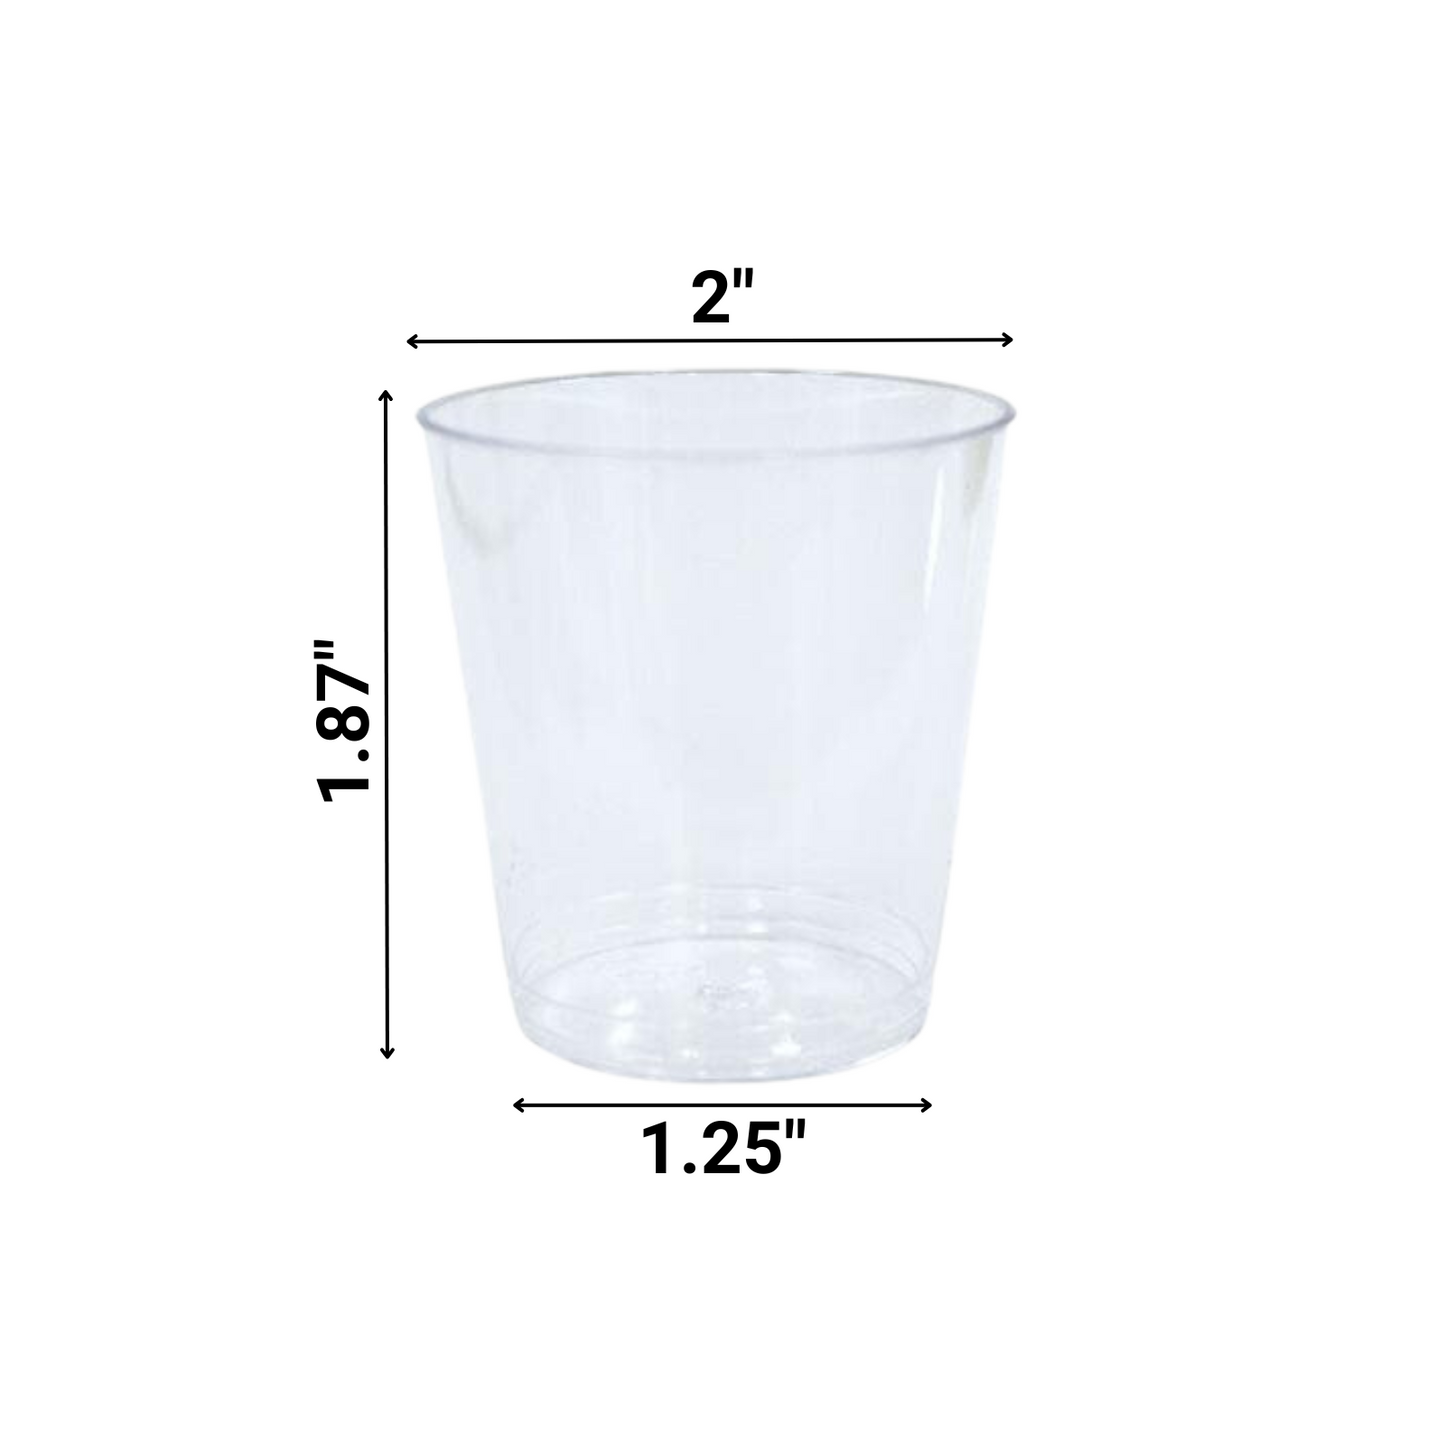 Plastic Shot Cups 2oz. Cups Party Dimensions   